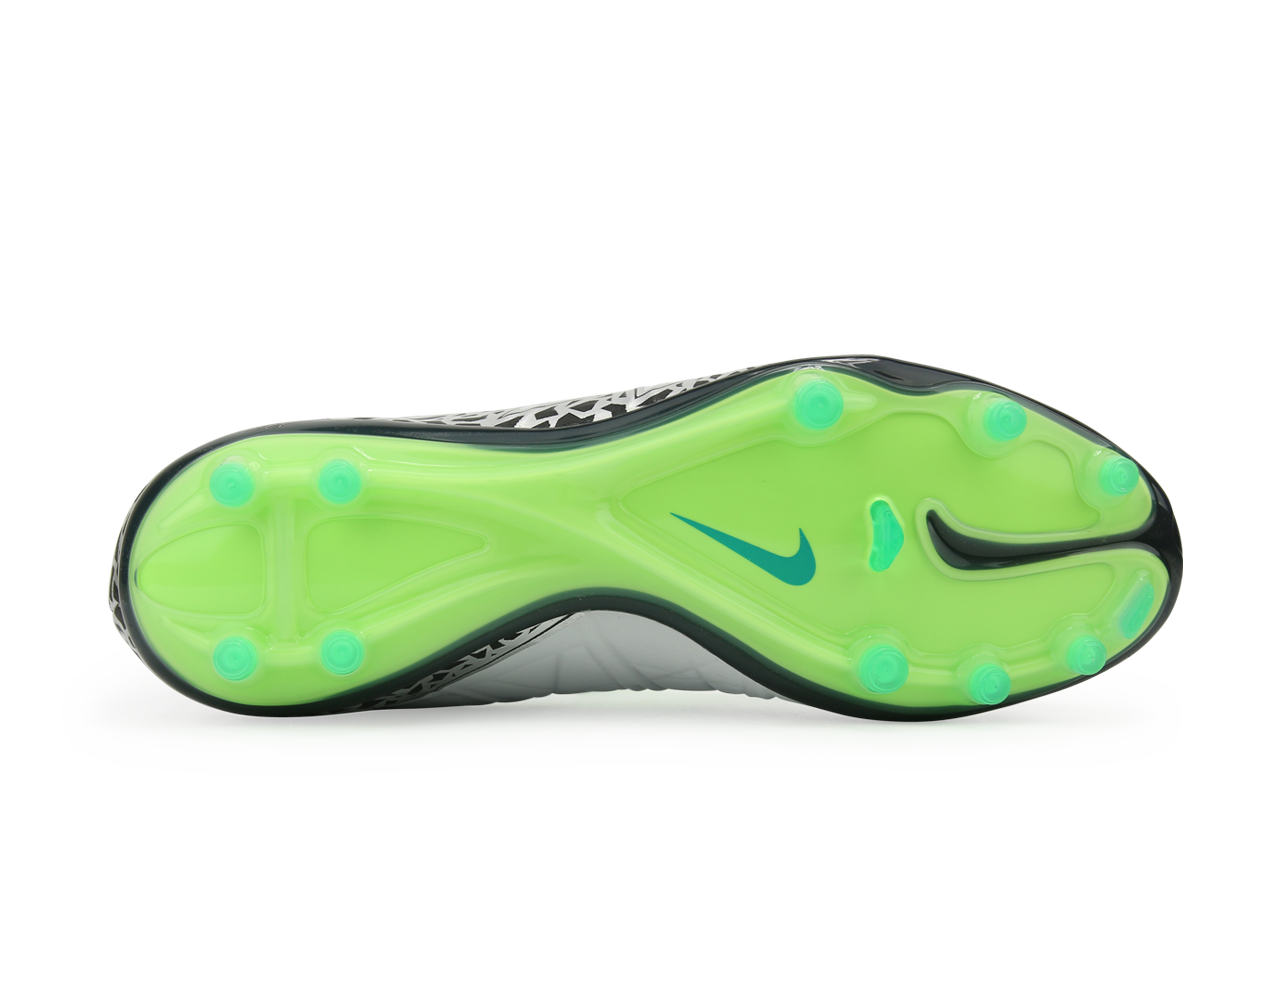 Nike Men's Hypervenom Phatal II DF FG Pure Platinum/Black/Ghost Green